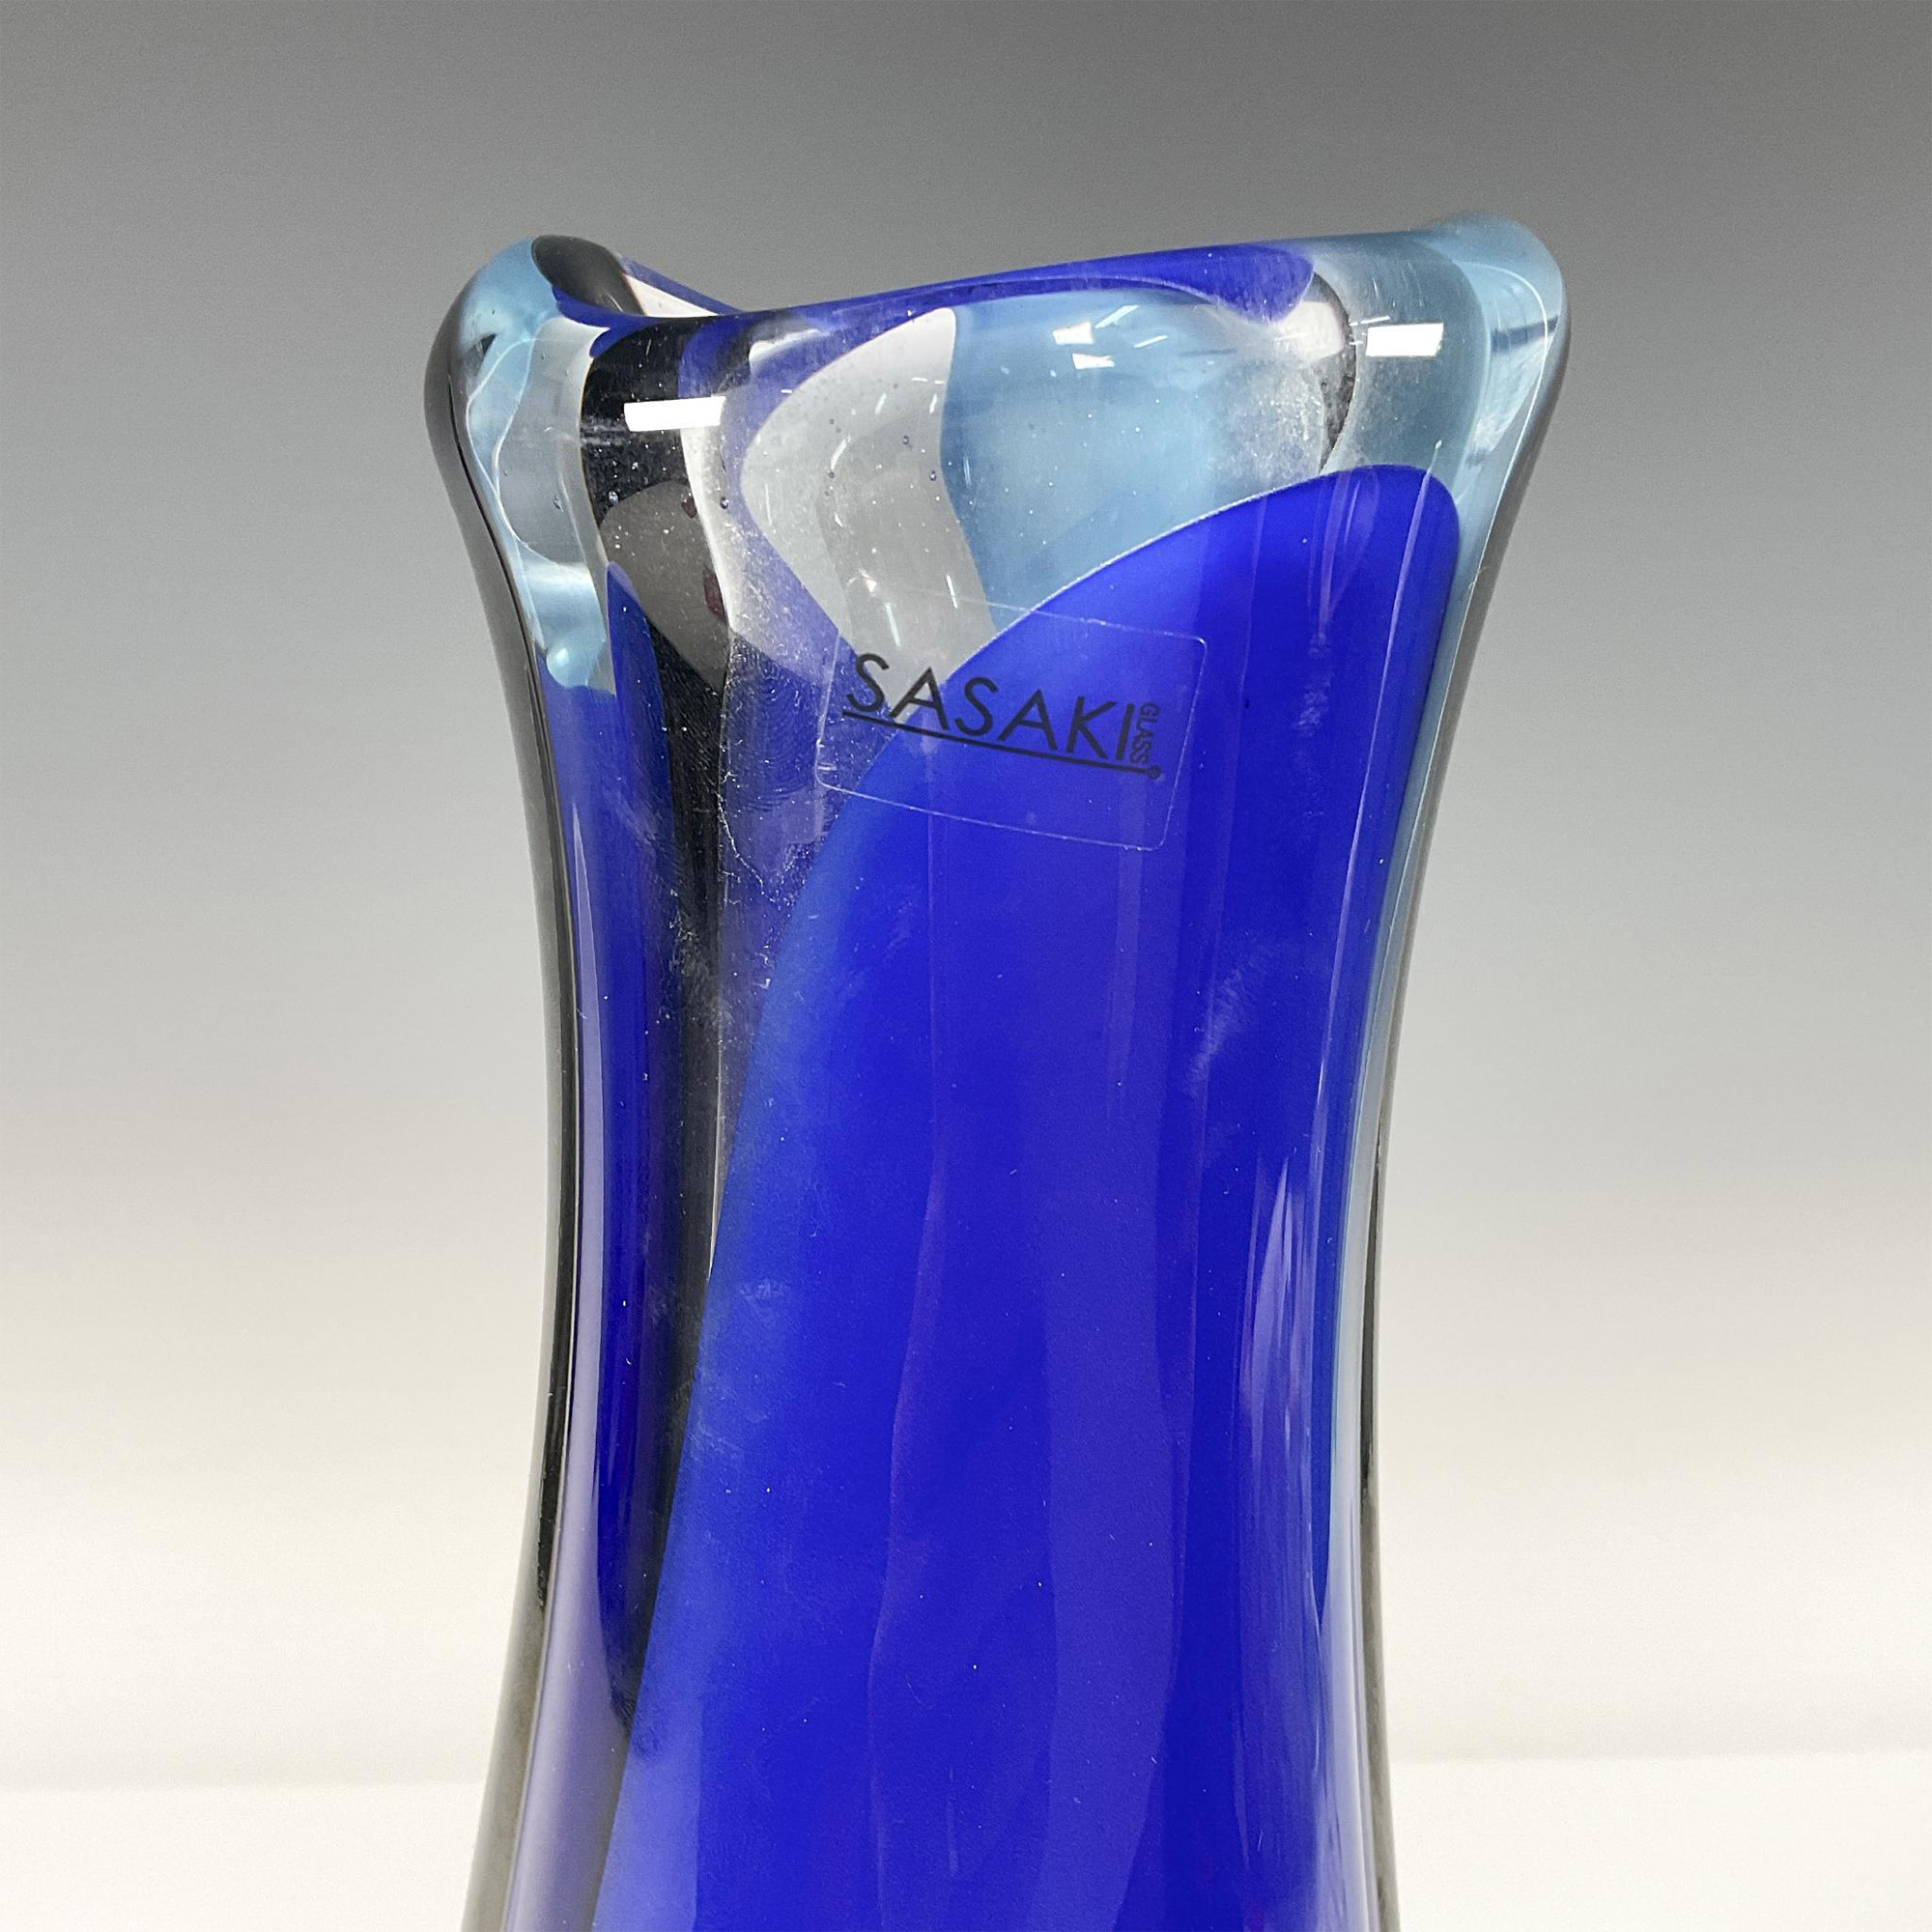 Sasaki Crystal Vase, Kyoto Swirl VS1002 - Image 4 of 4